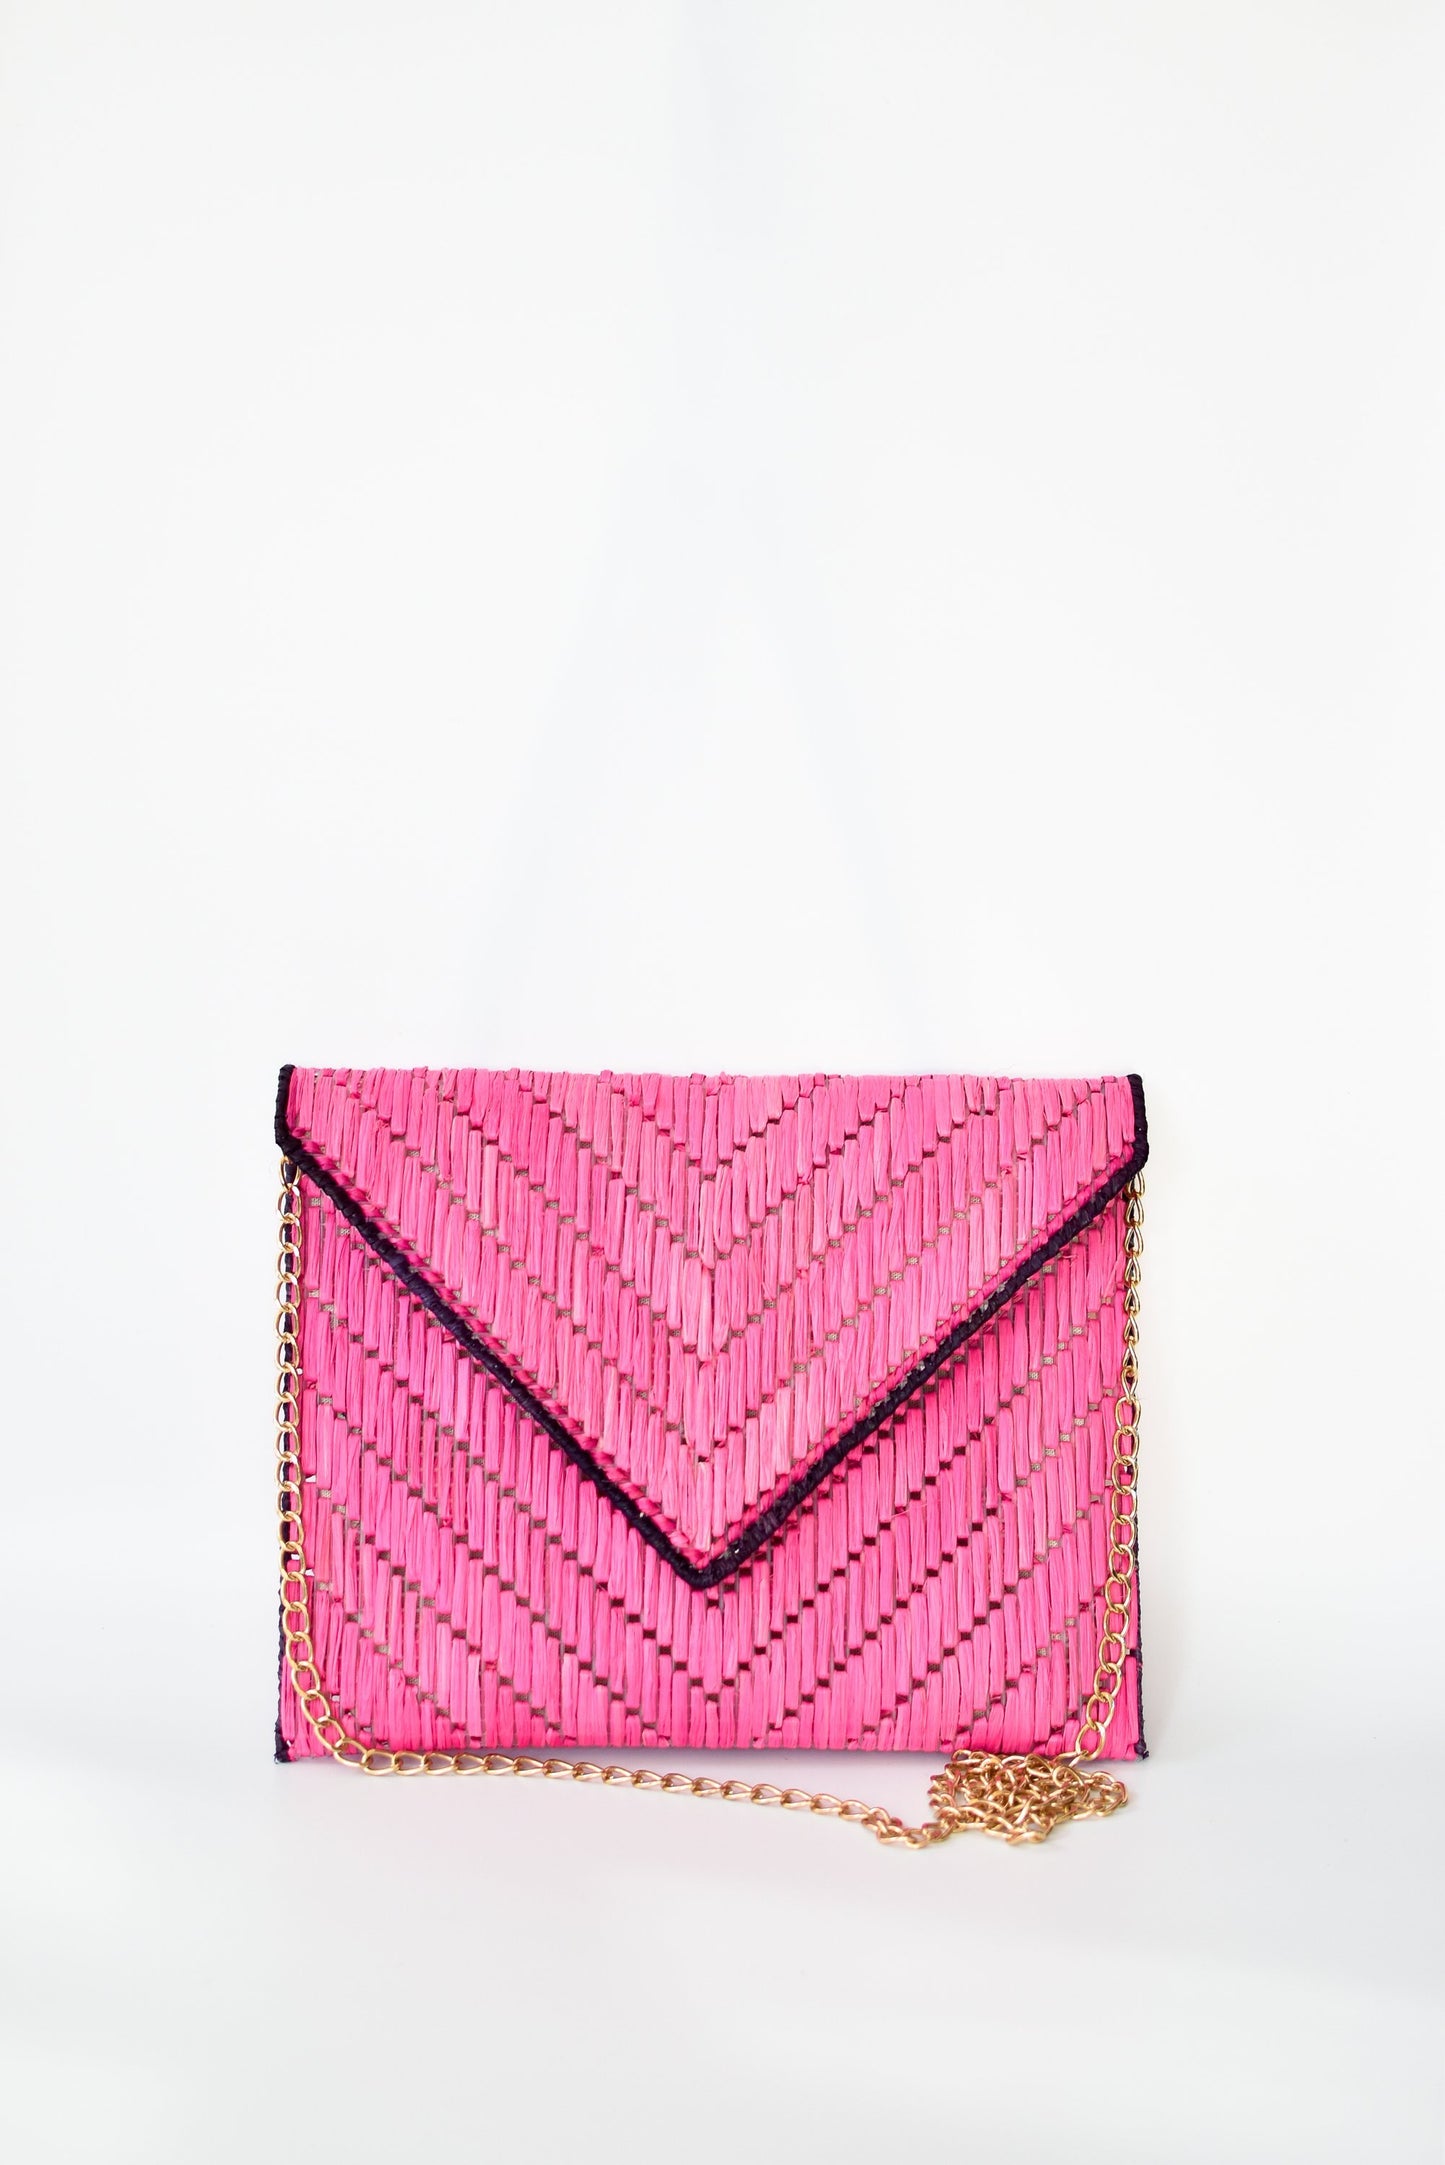 Bright pink woven raffia straw clutch with detachable gold chain strap. 